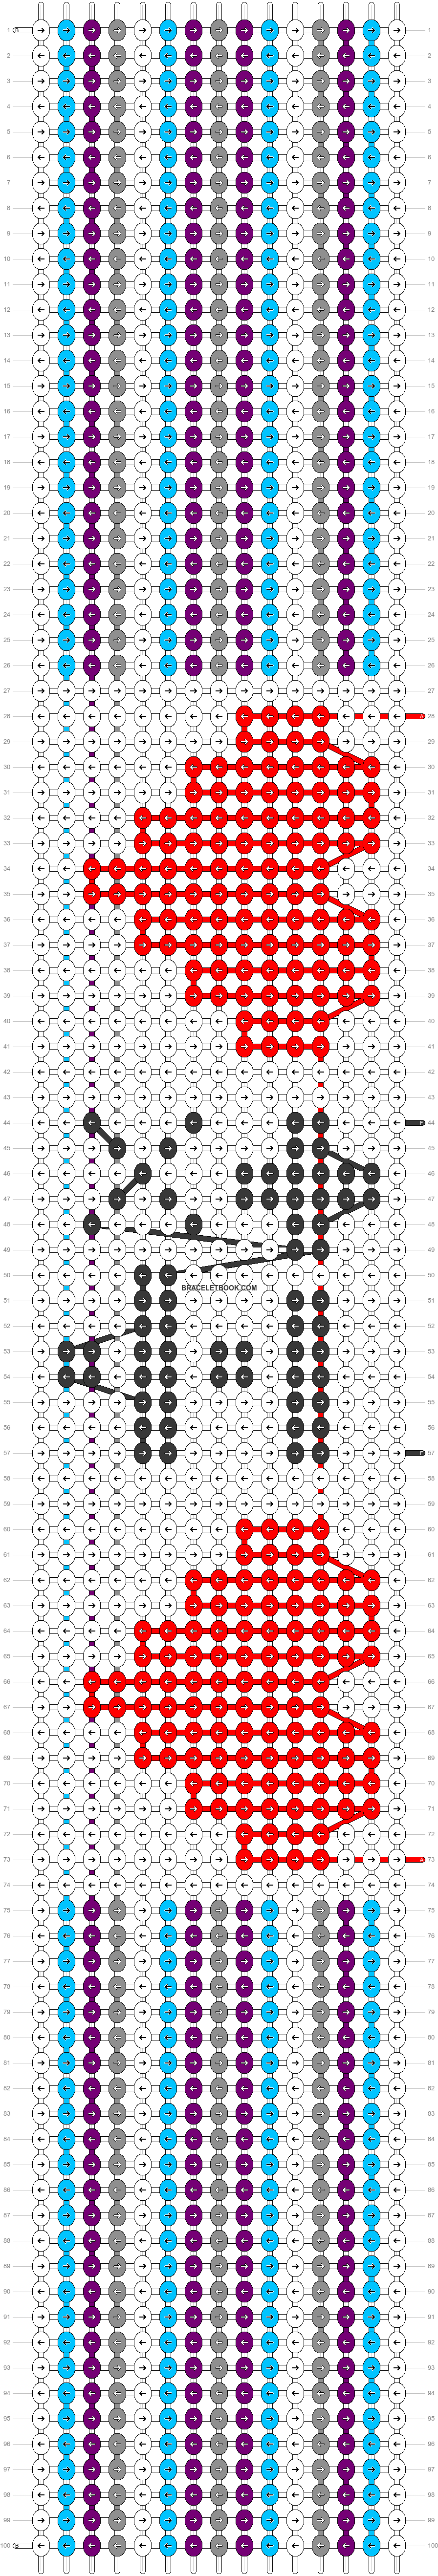 Alpha pattern #35578 pattern